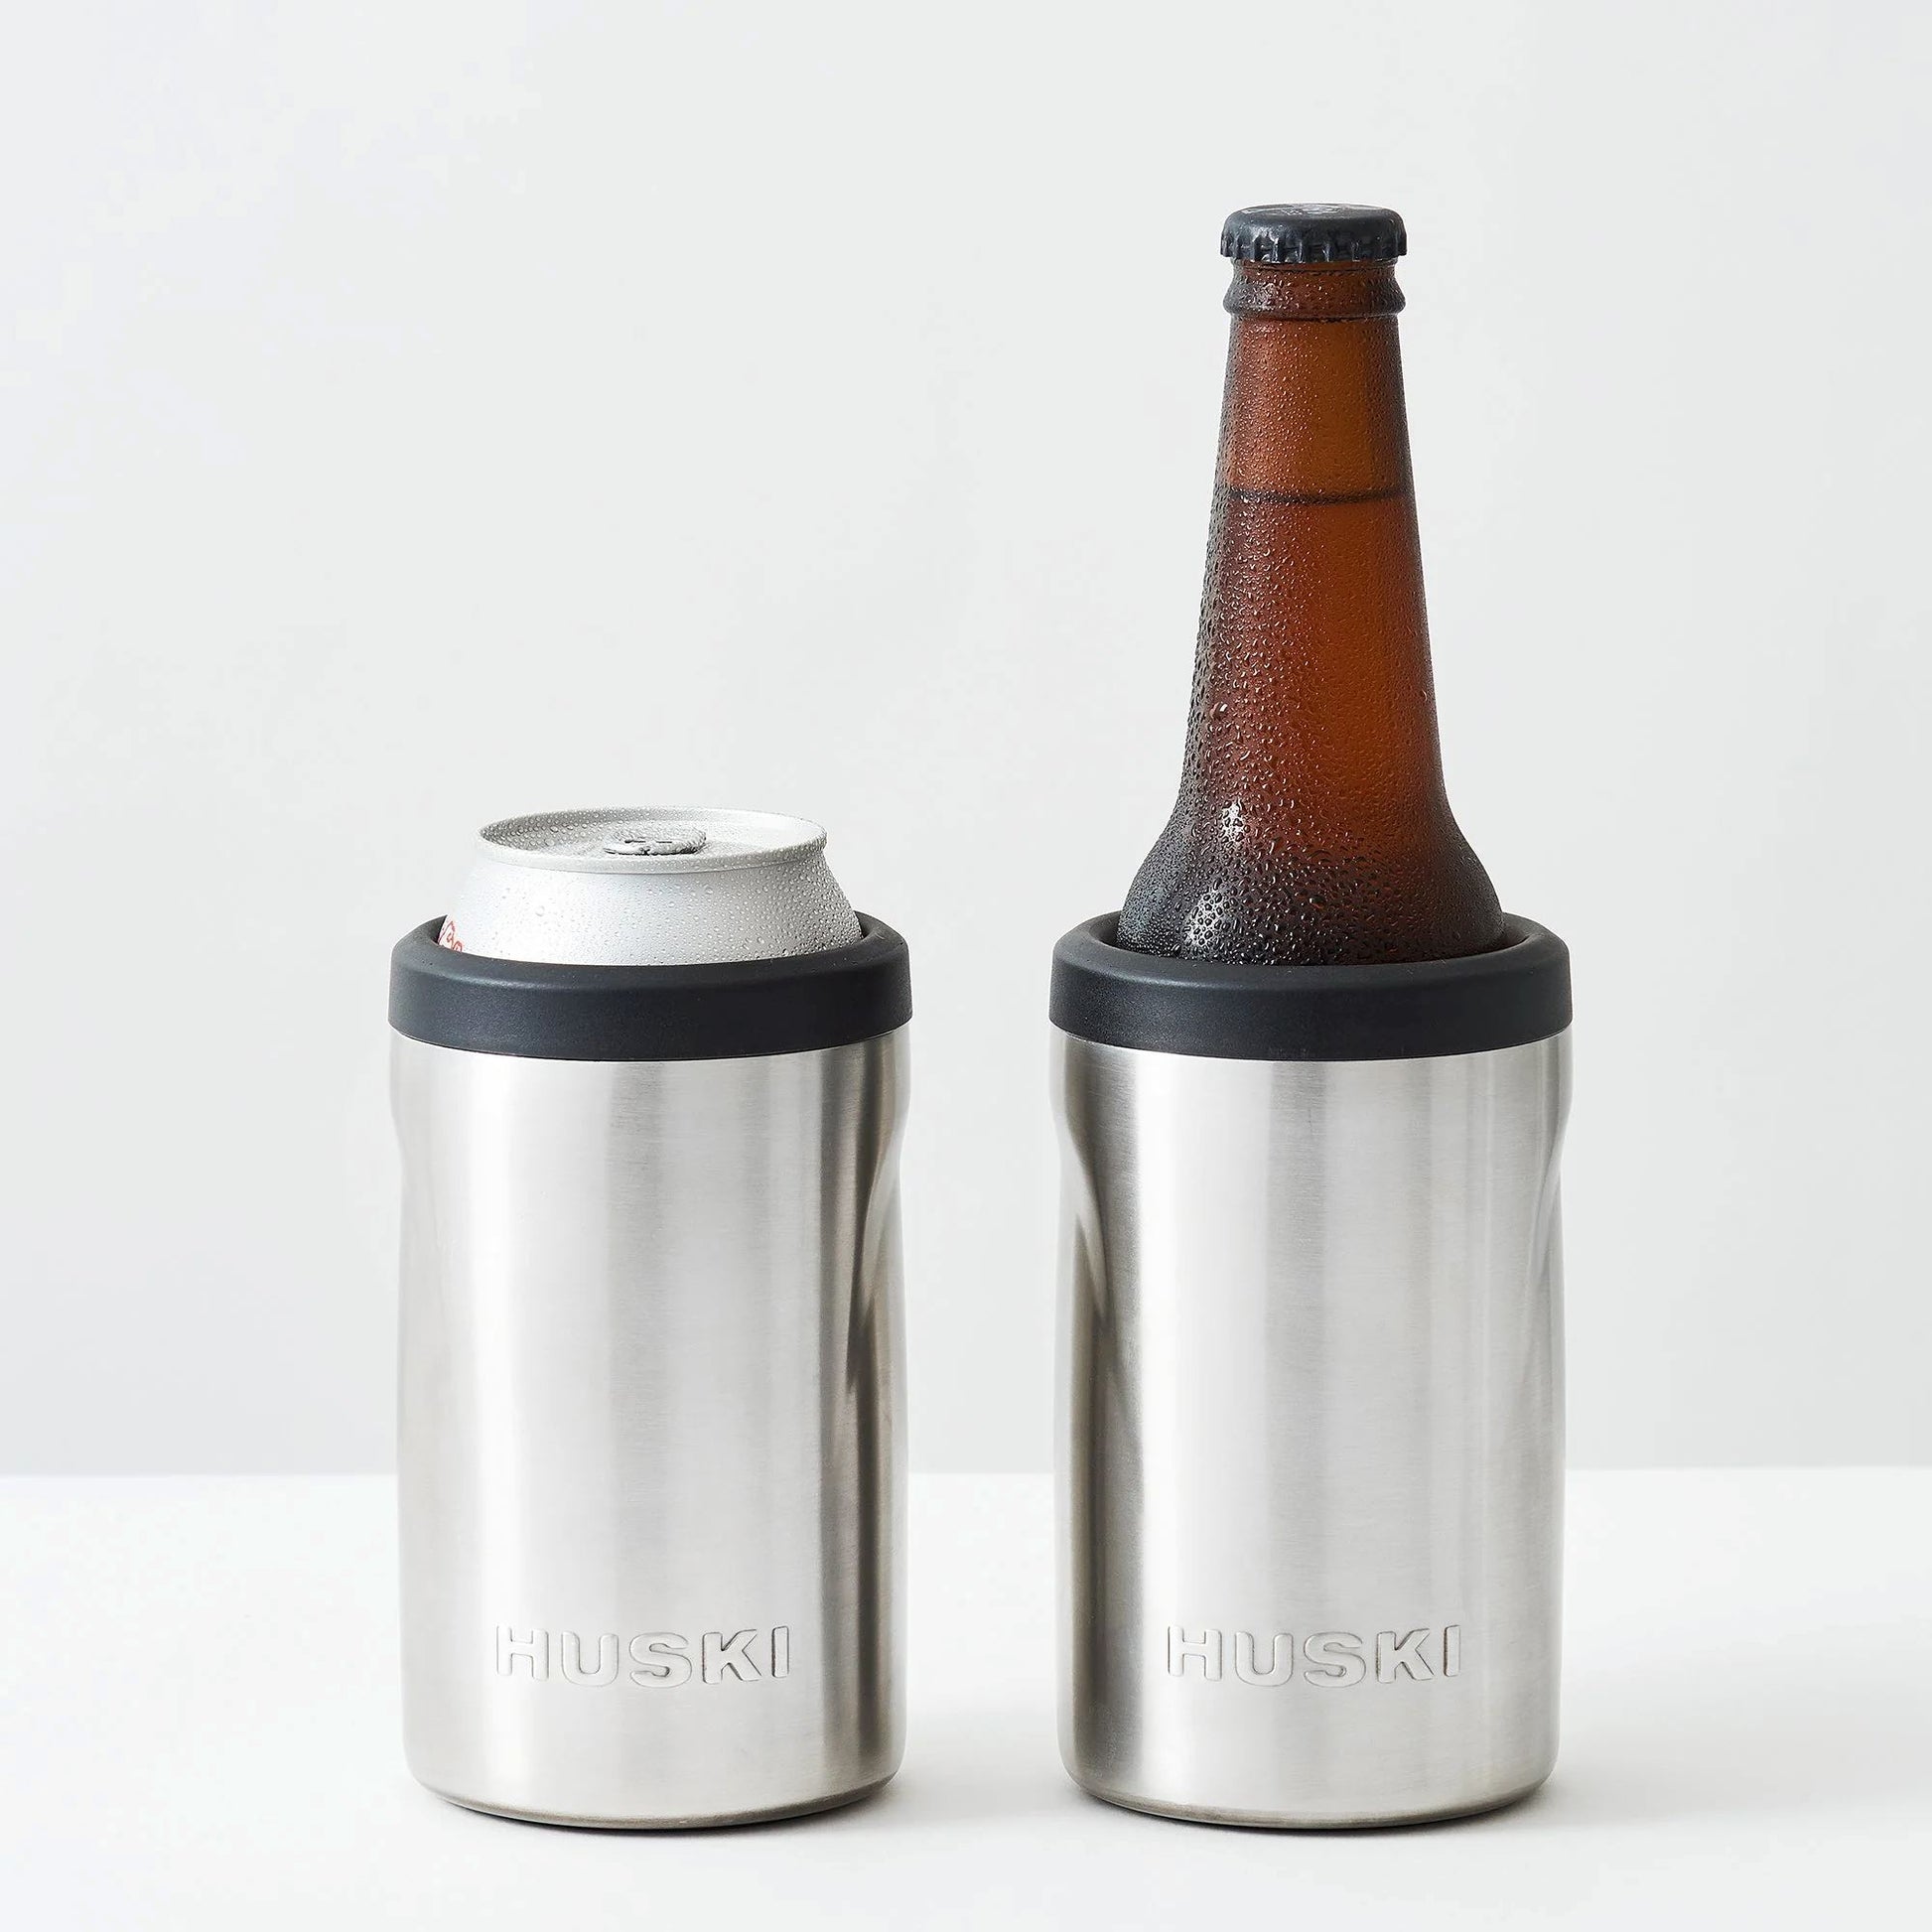 Huski Beer Cooler 2.0 - White Beer Cooler Huski 